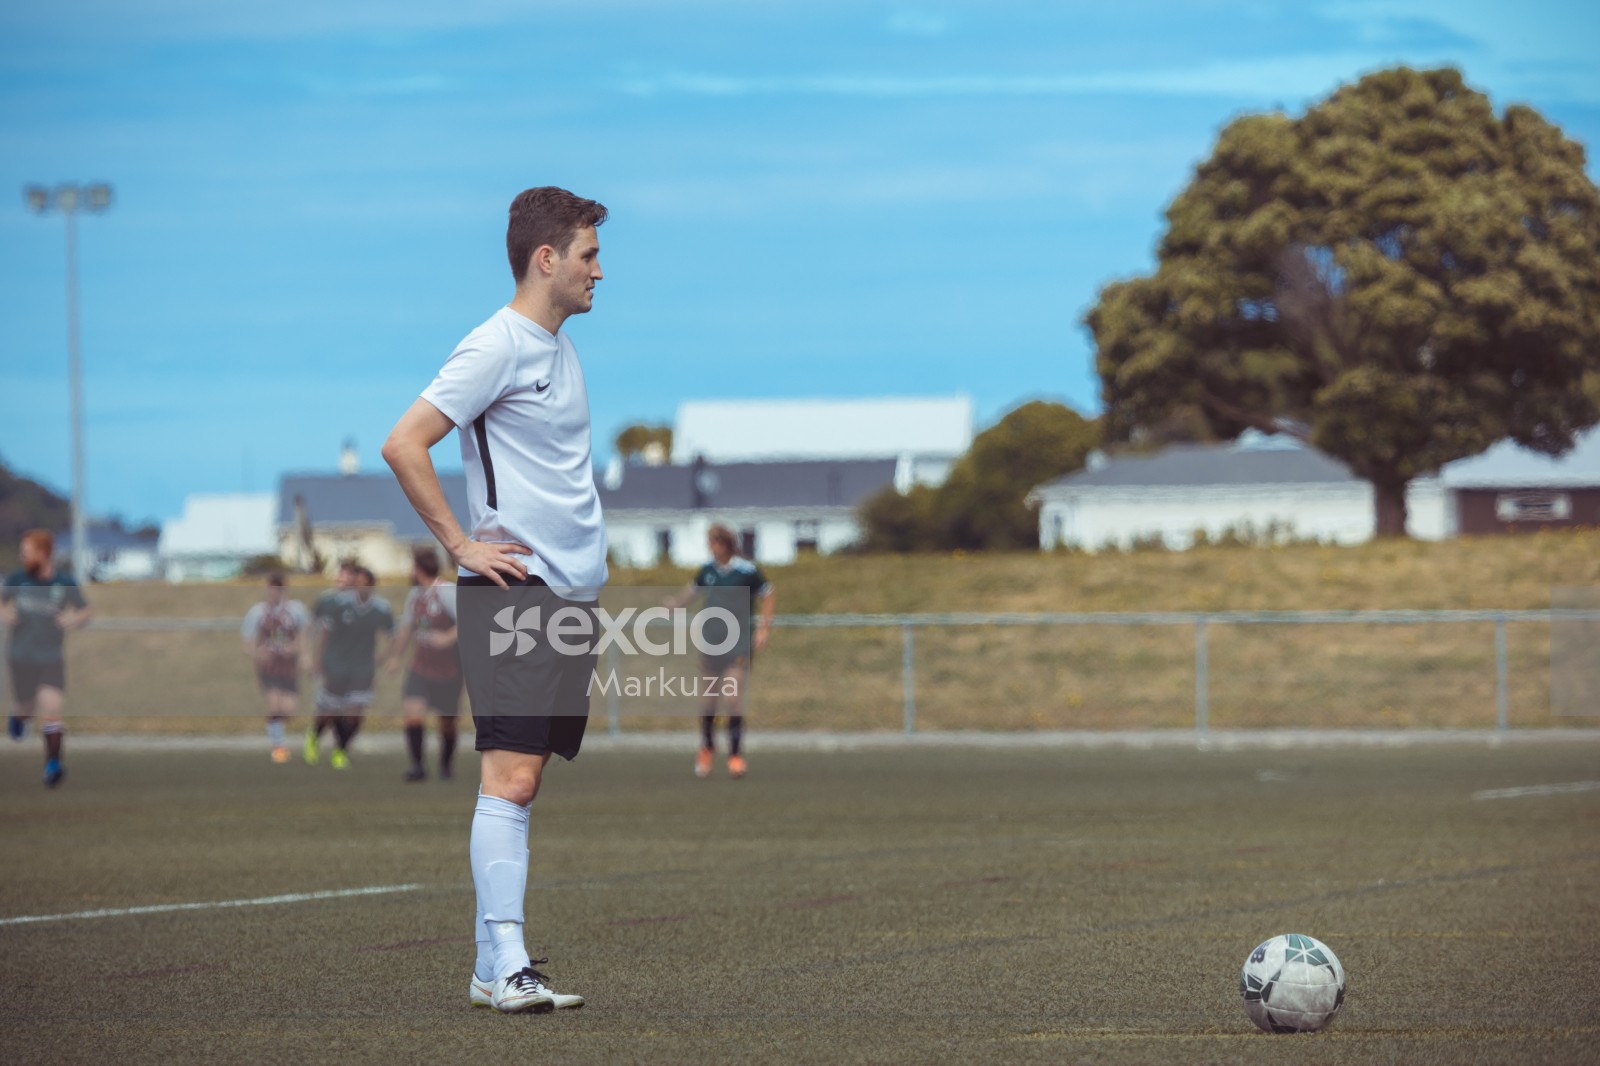 Player in white Nike shirt waiting to kick football - Sports Zone sunday league